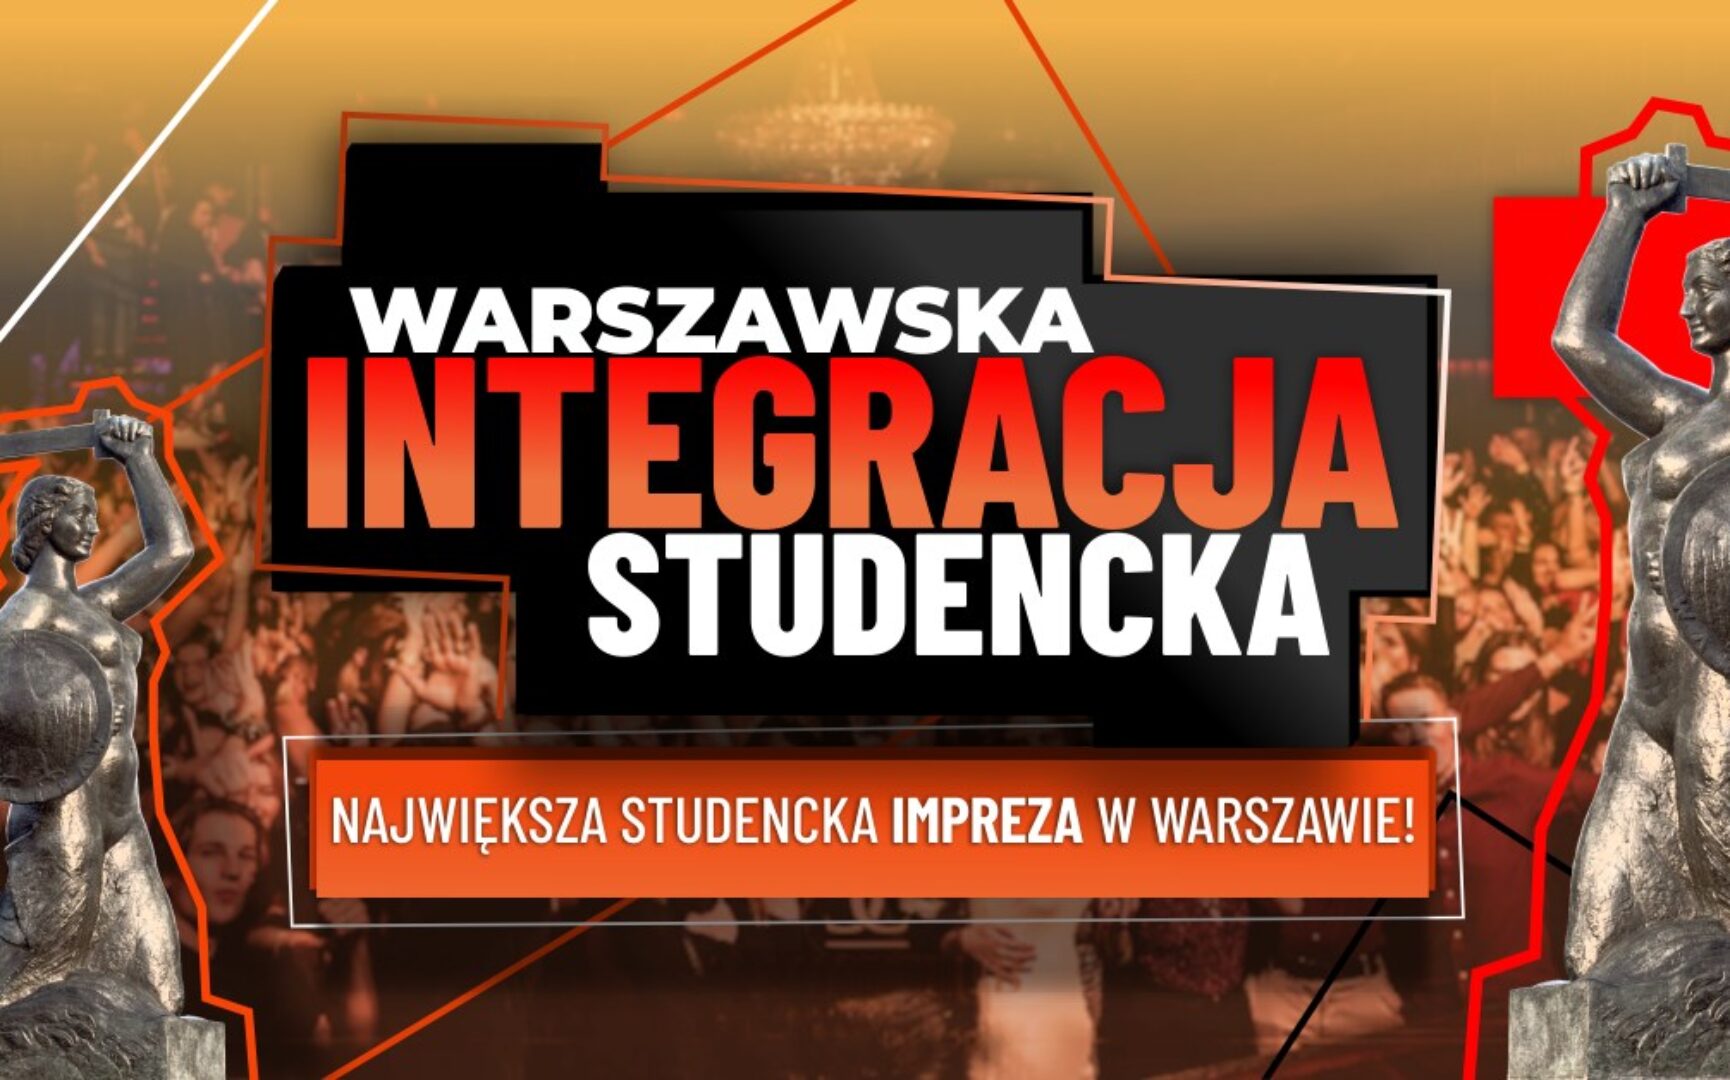 Warszawska Integracja Studencka